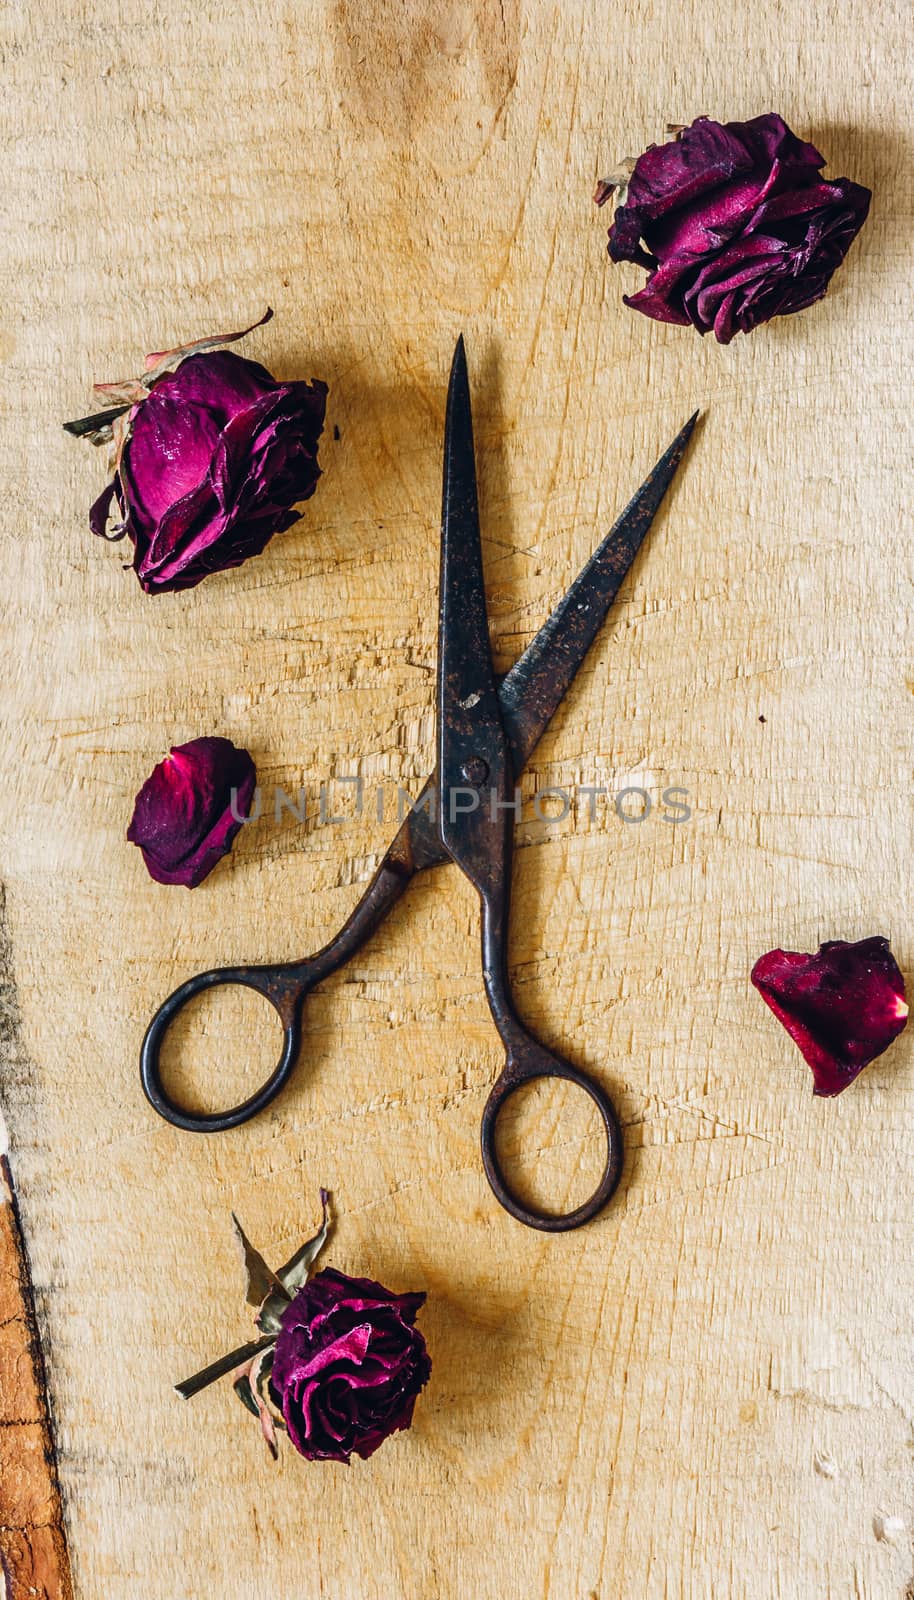 Scissors with Rosebuds. by Seva_blsv